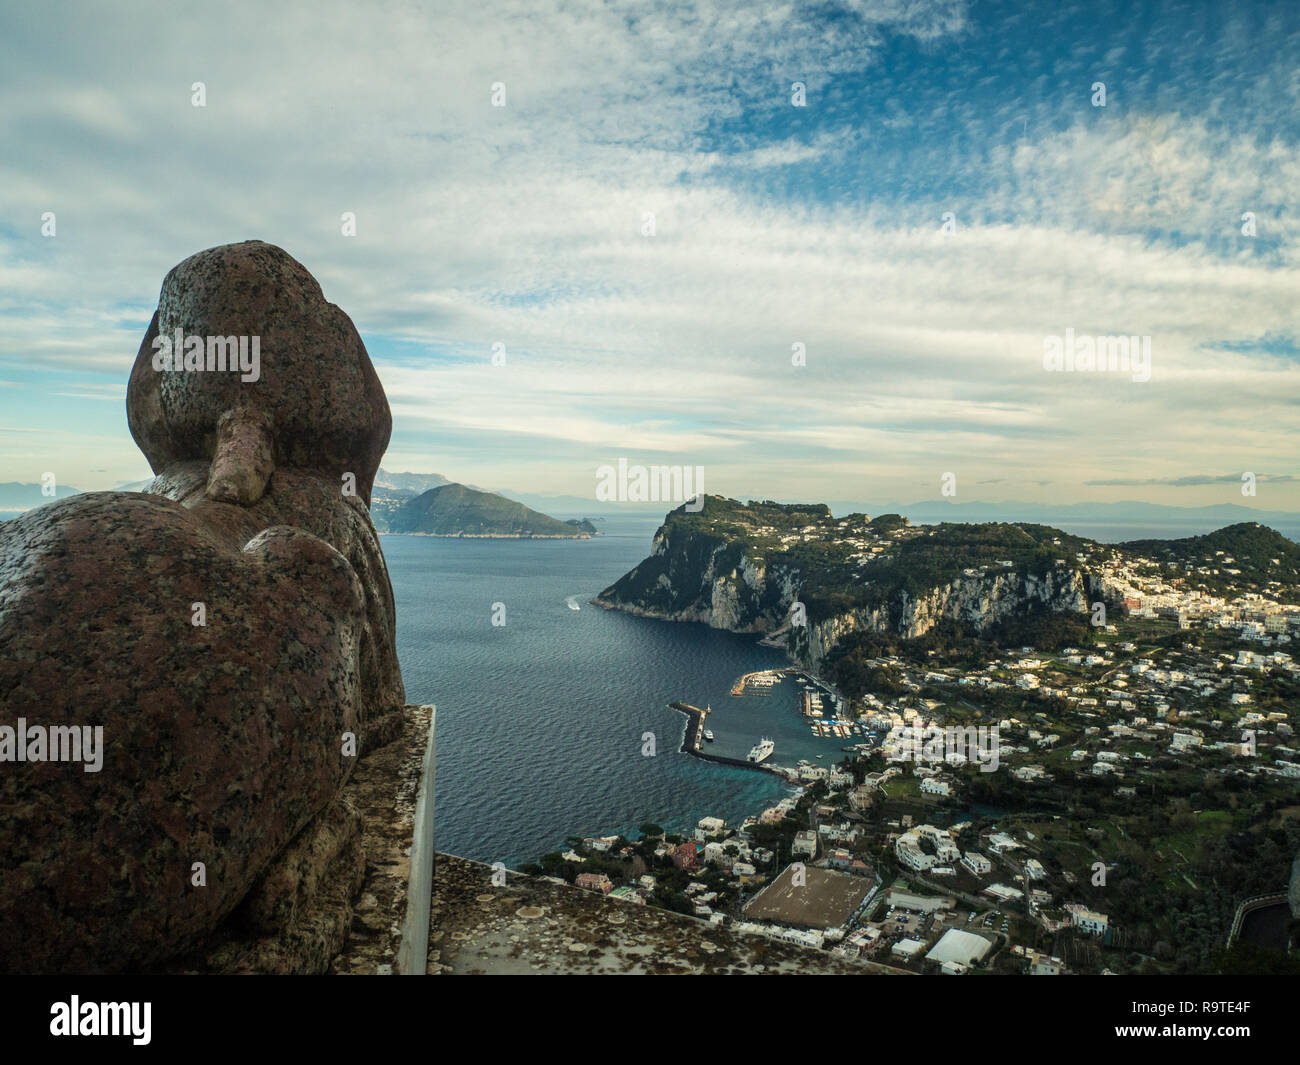 Egyptin Sphinx at Villa San Michele overlooking Marina Grande on the Island of Capri in the region of Campania, Italy Stock Photo